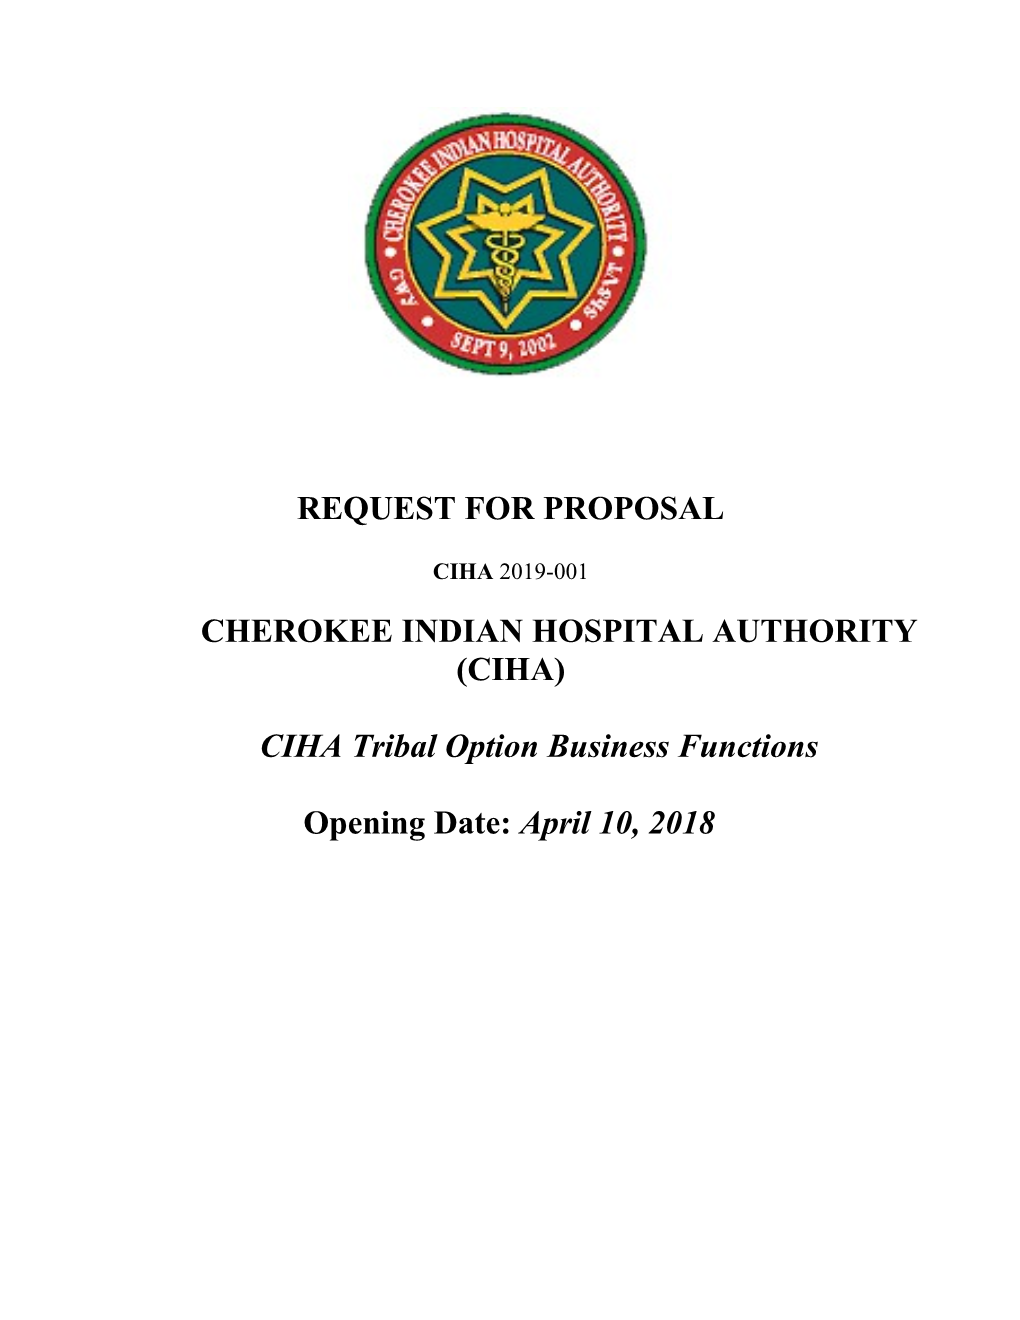 Cherokee Indian Hospital Authority